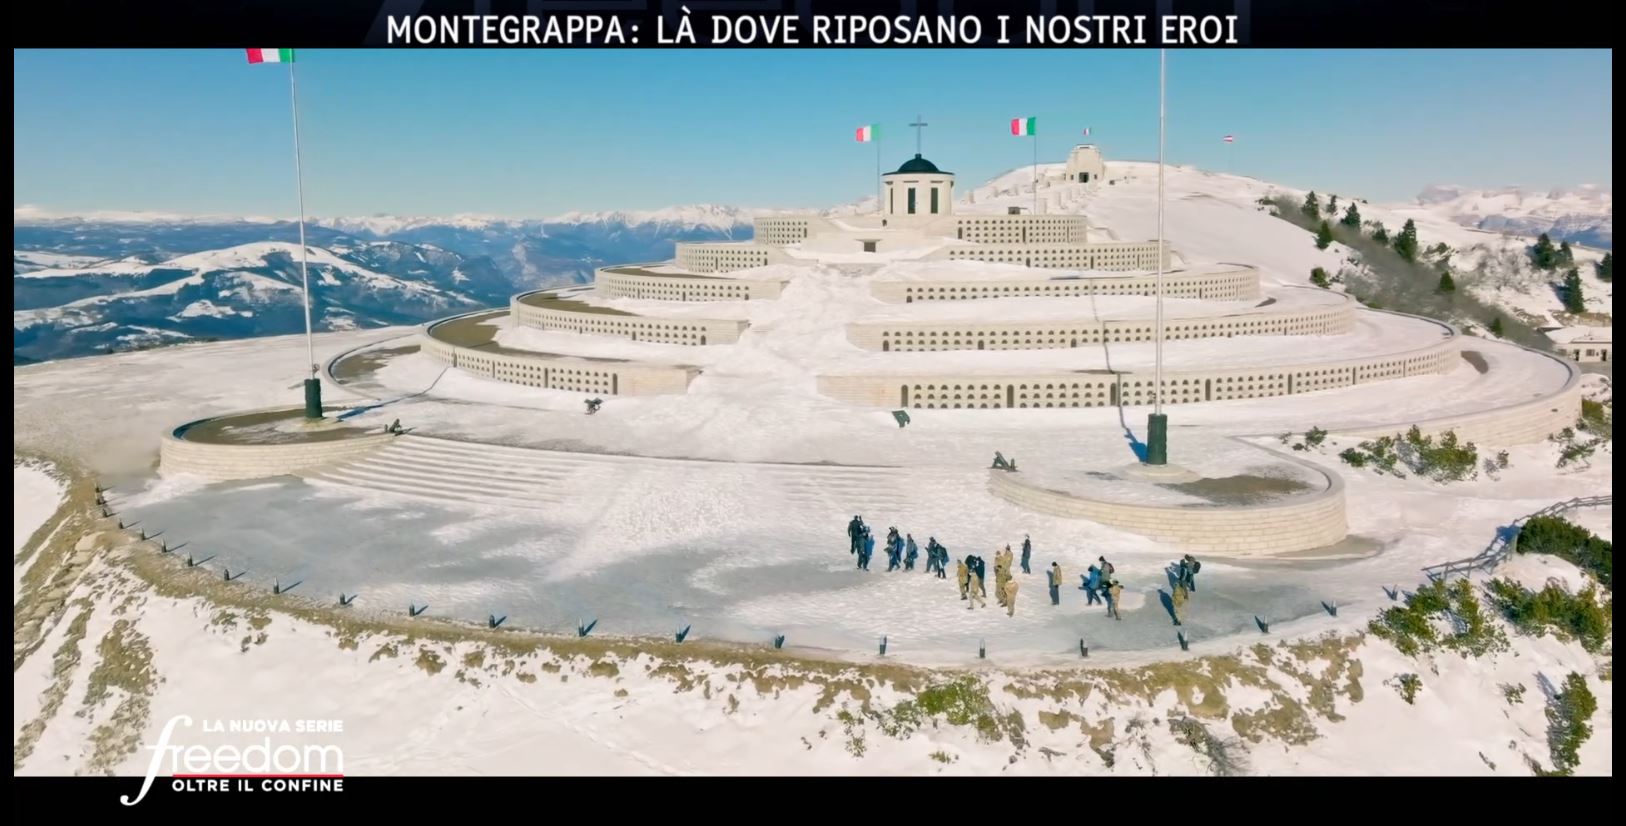 Freedom - Sacrario Monte Grappa 1